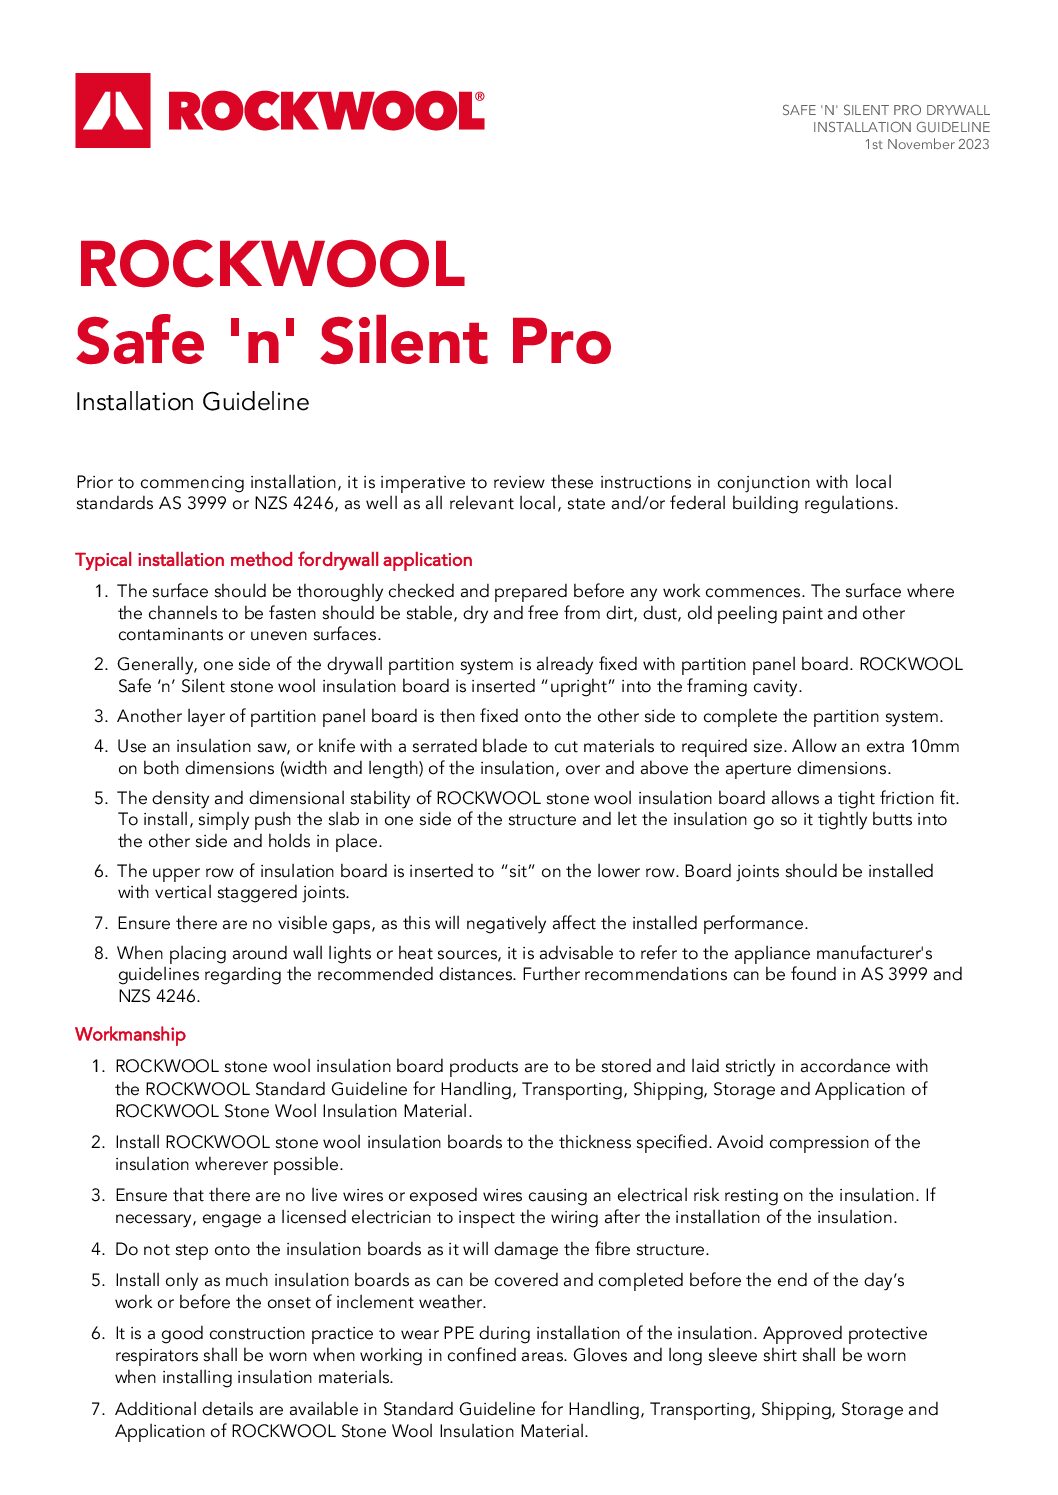 Installation Guidelines – Rockwool Safe ‘n’ Silent Pro – Internal Walls